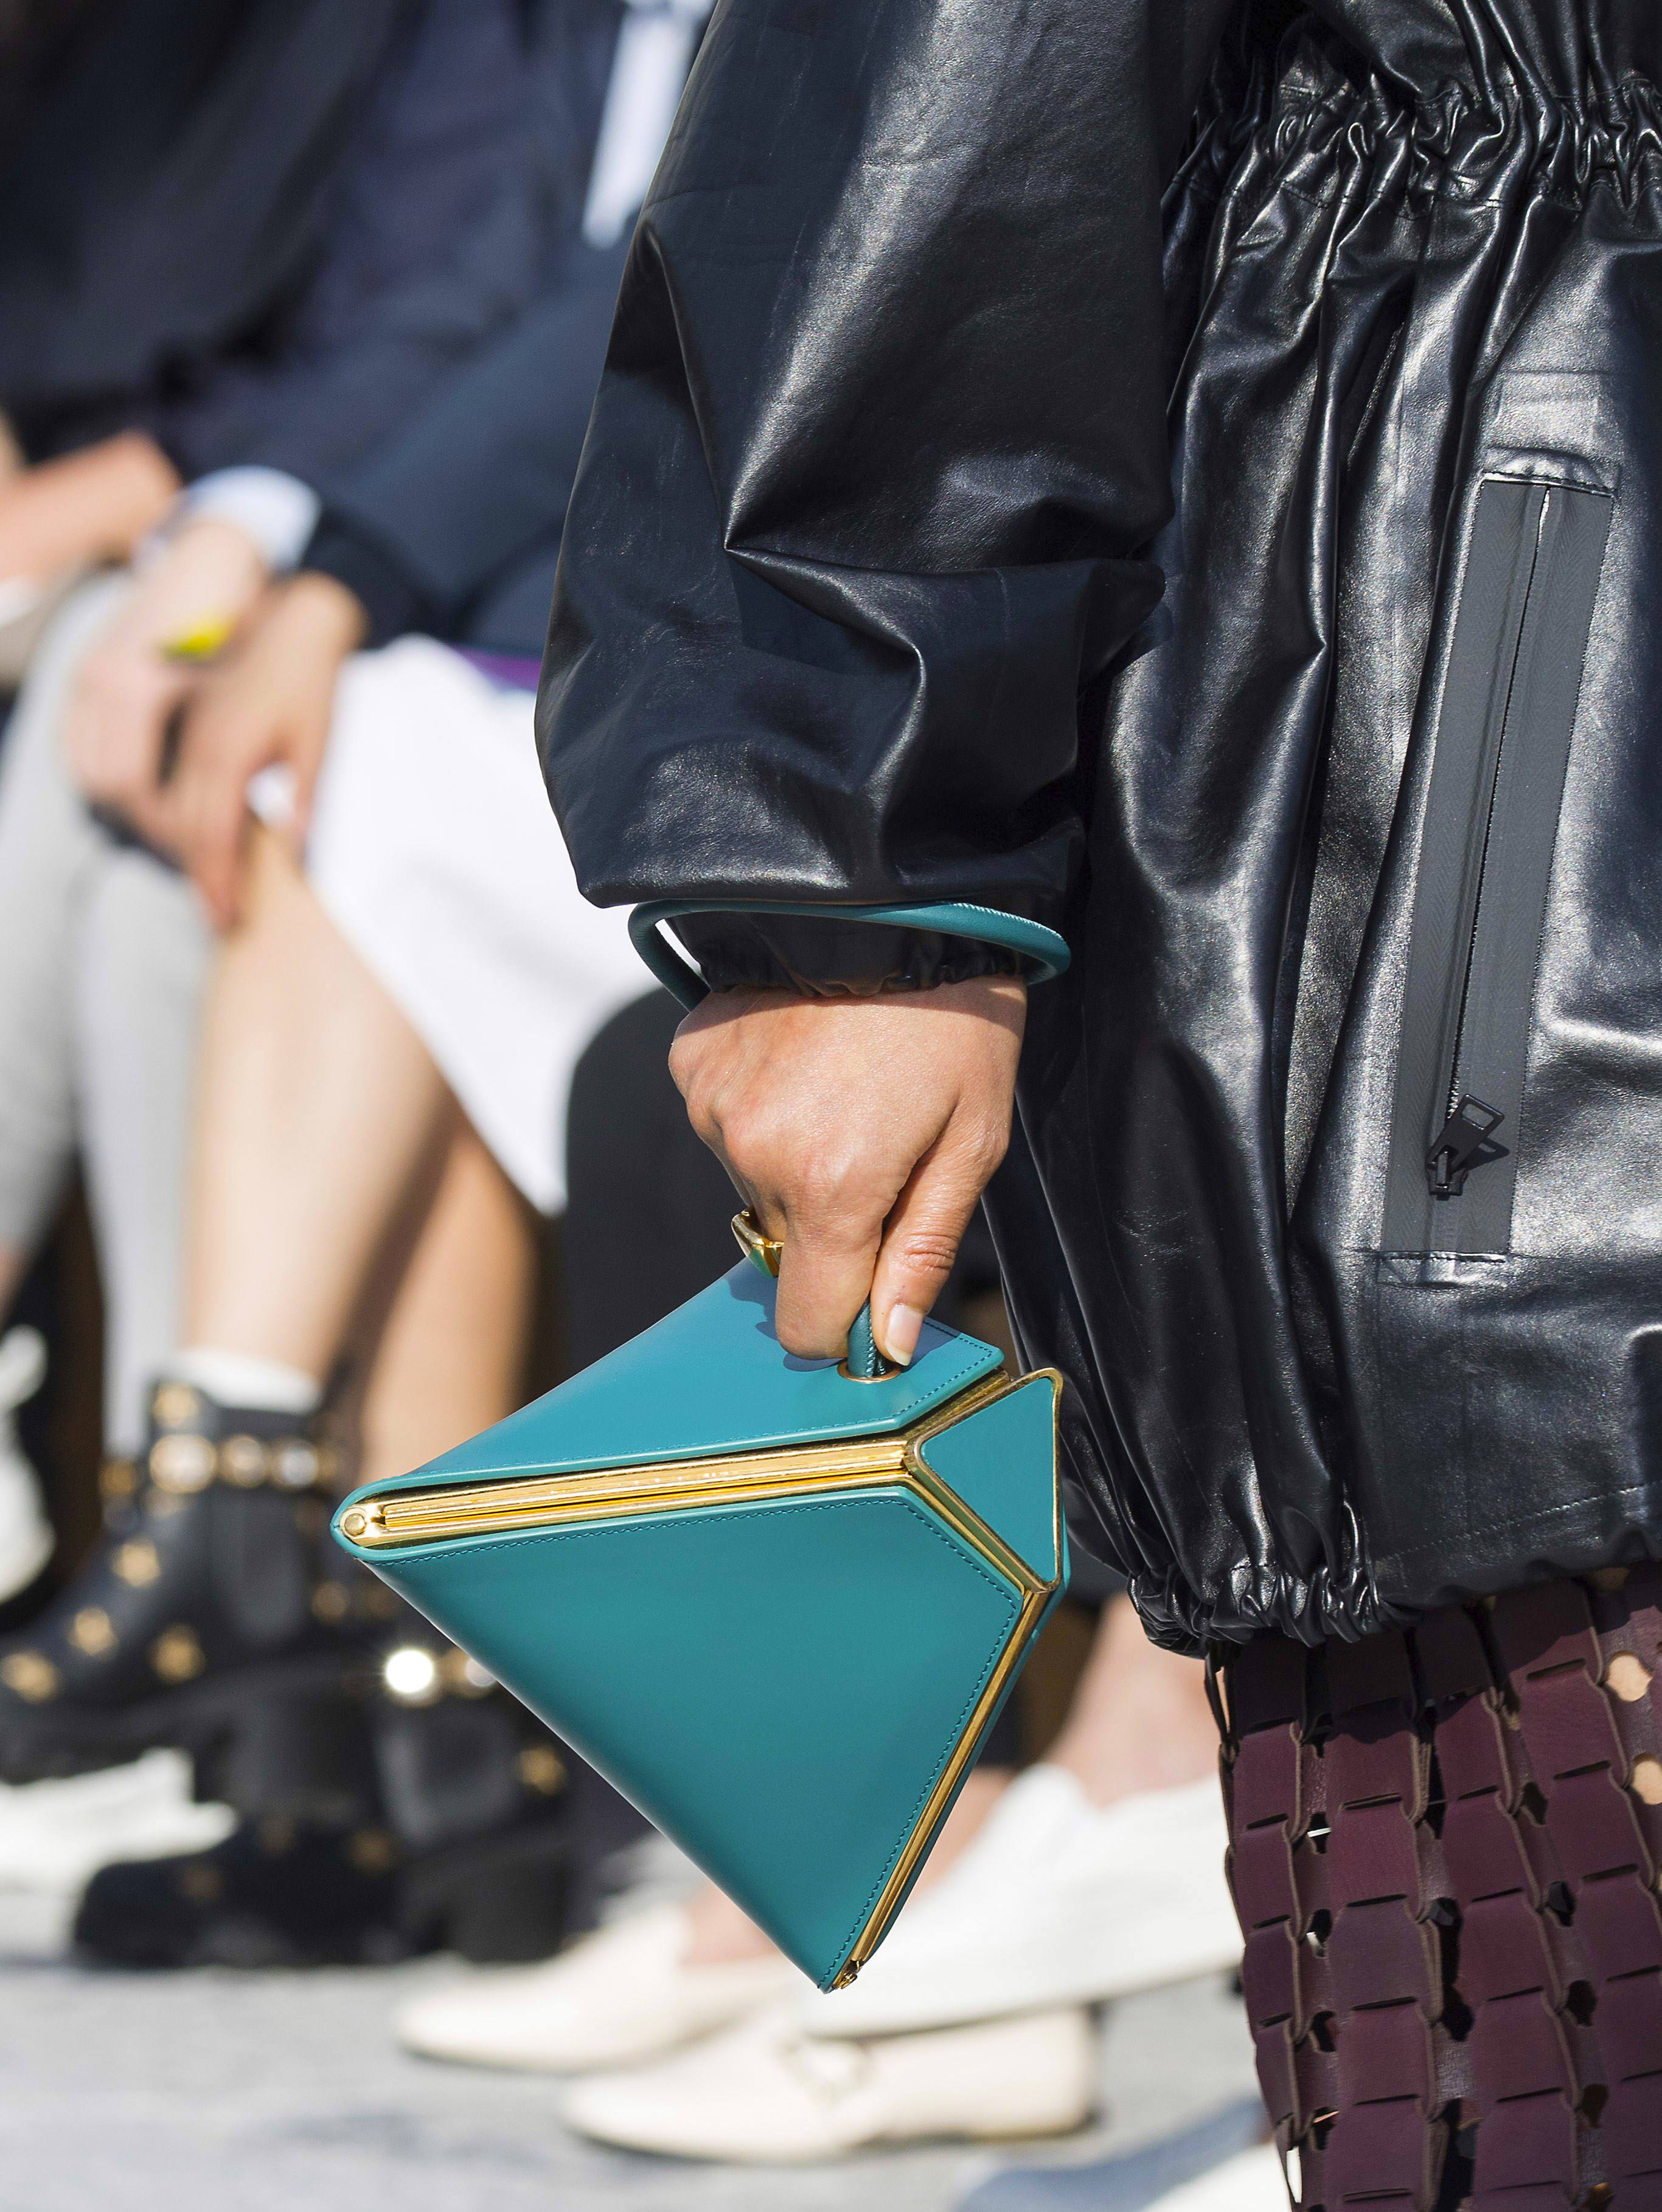 Green geometrical bag from the Bottega Veneta Fall 2019 Runway Bag Collection